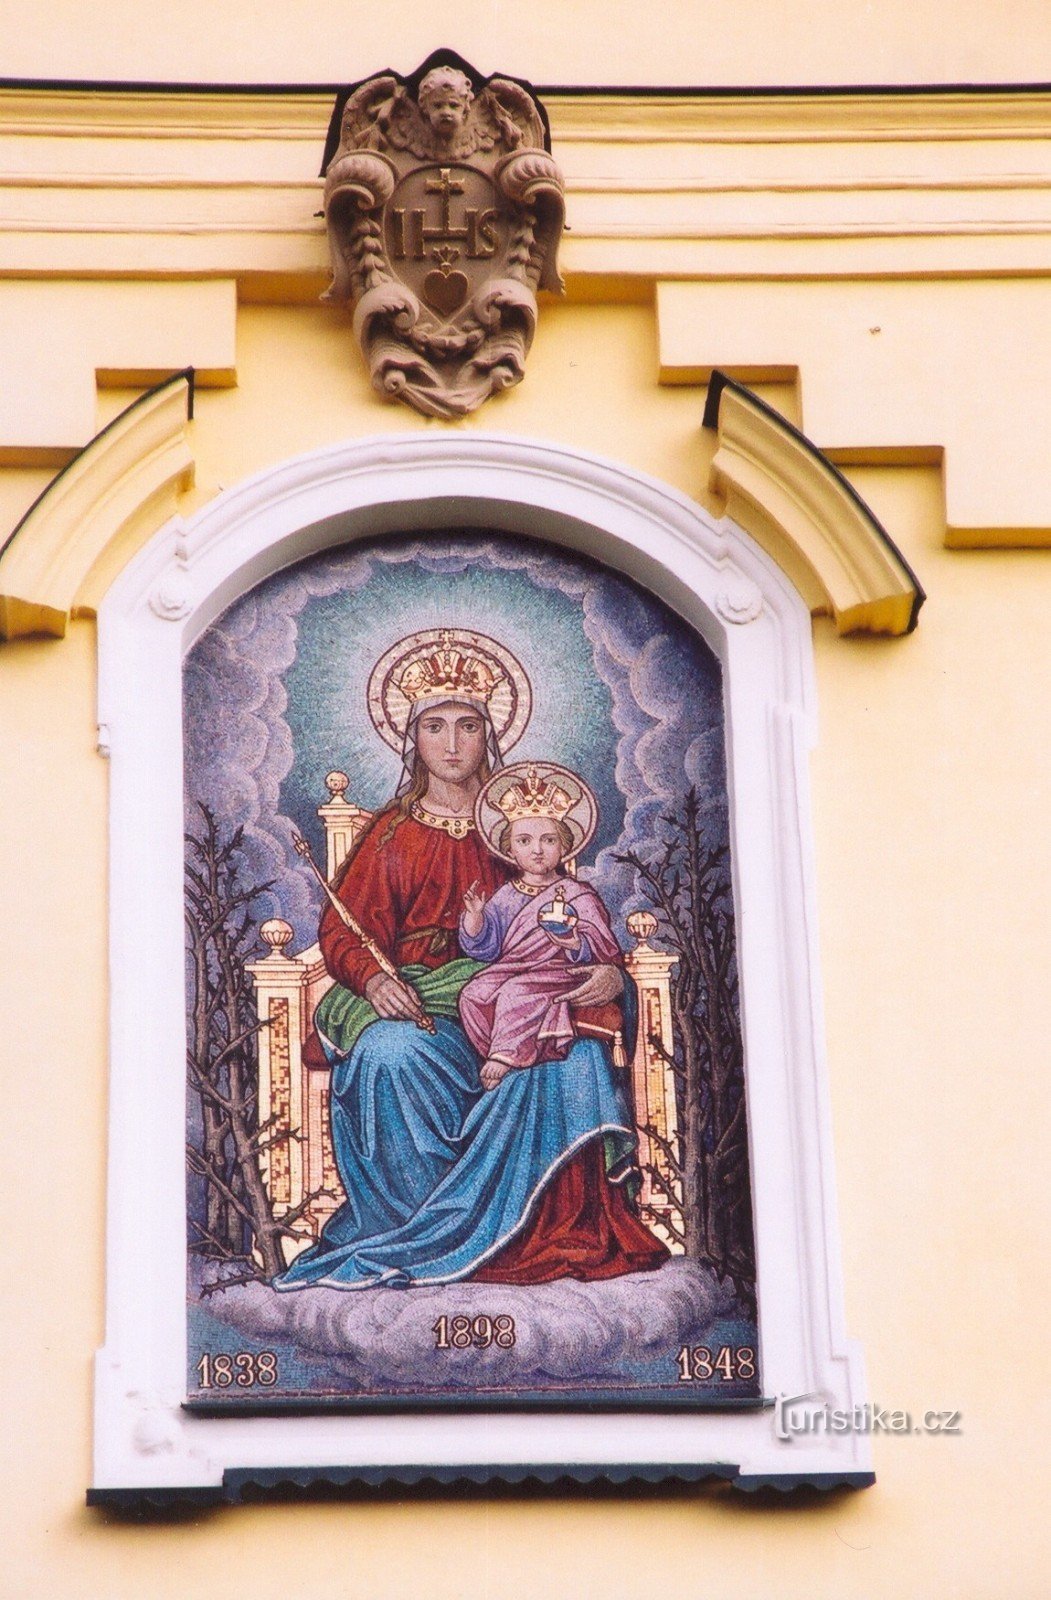 Brno-Tuřany - Biserica Buna Vestire a Fecioarei Maria